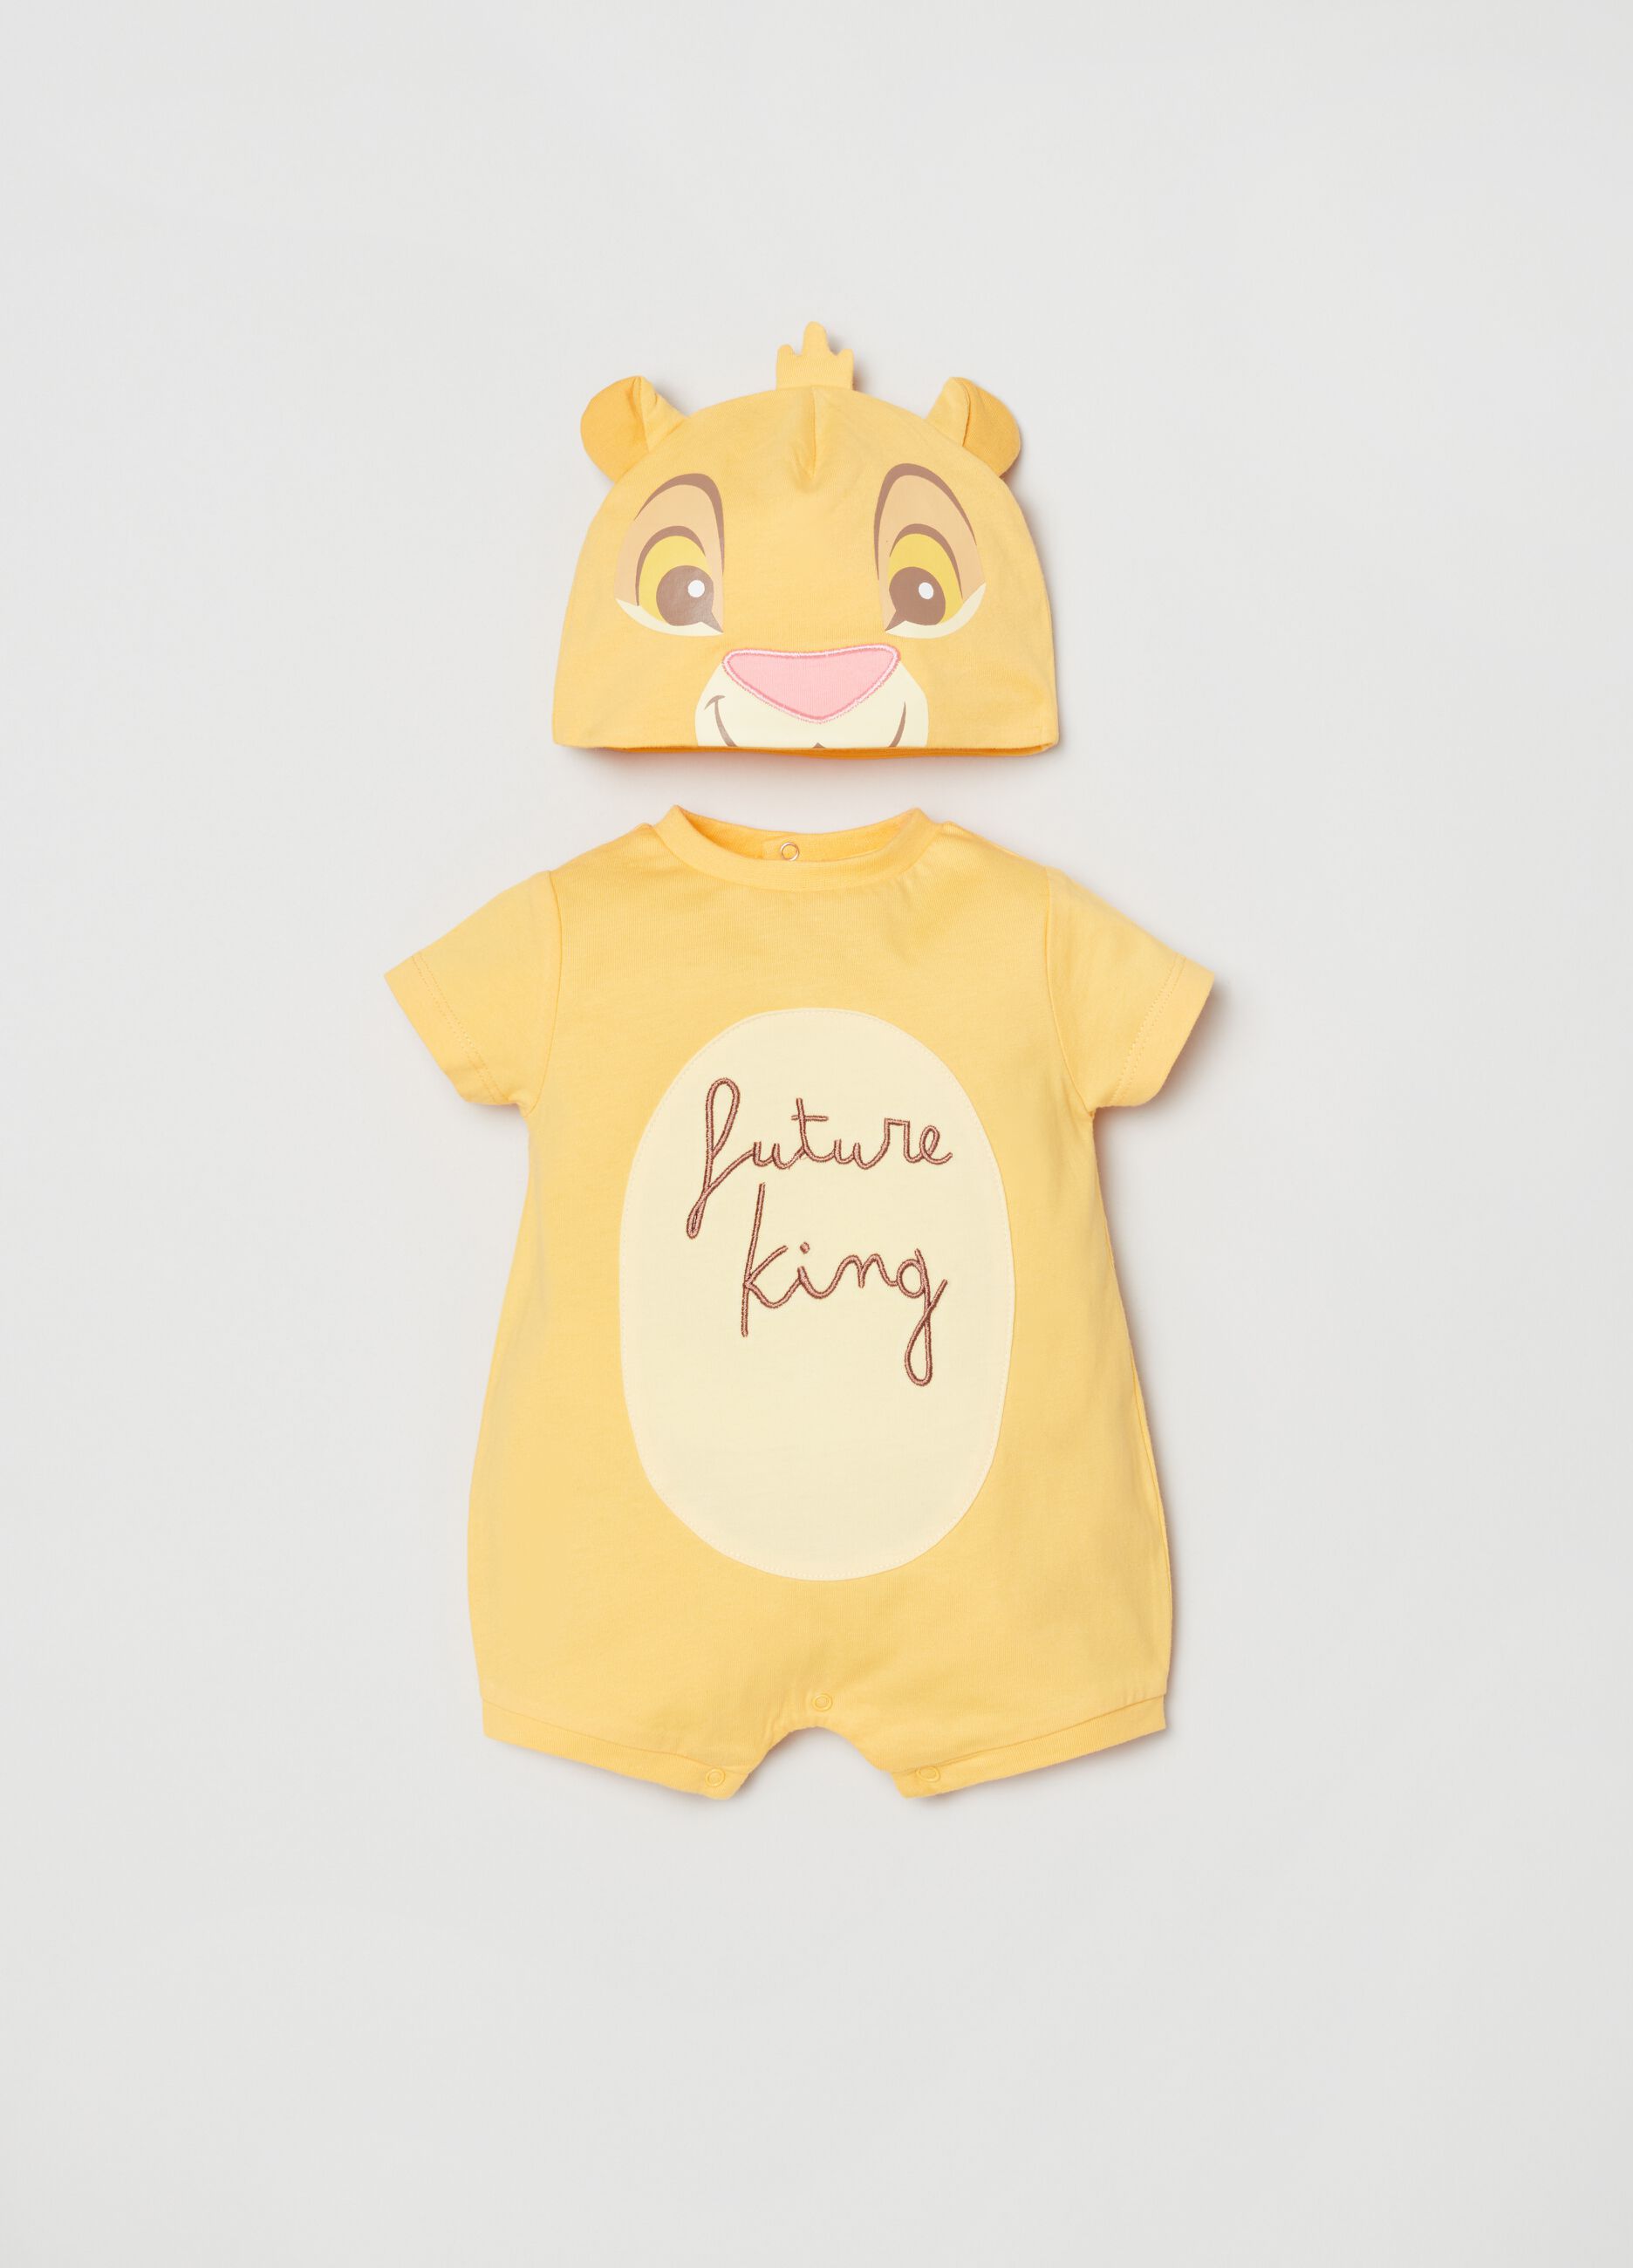 Disney Baby Lion King romper suit and hat set